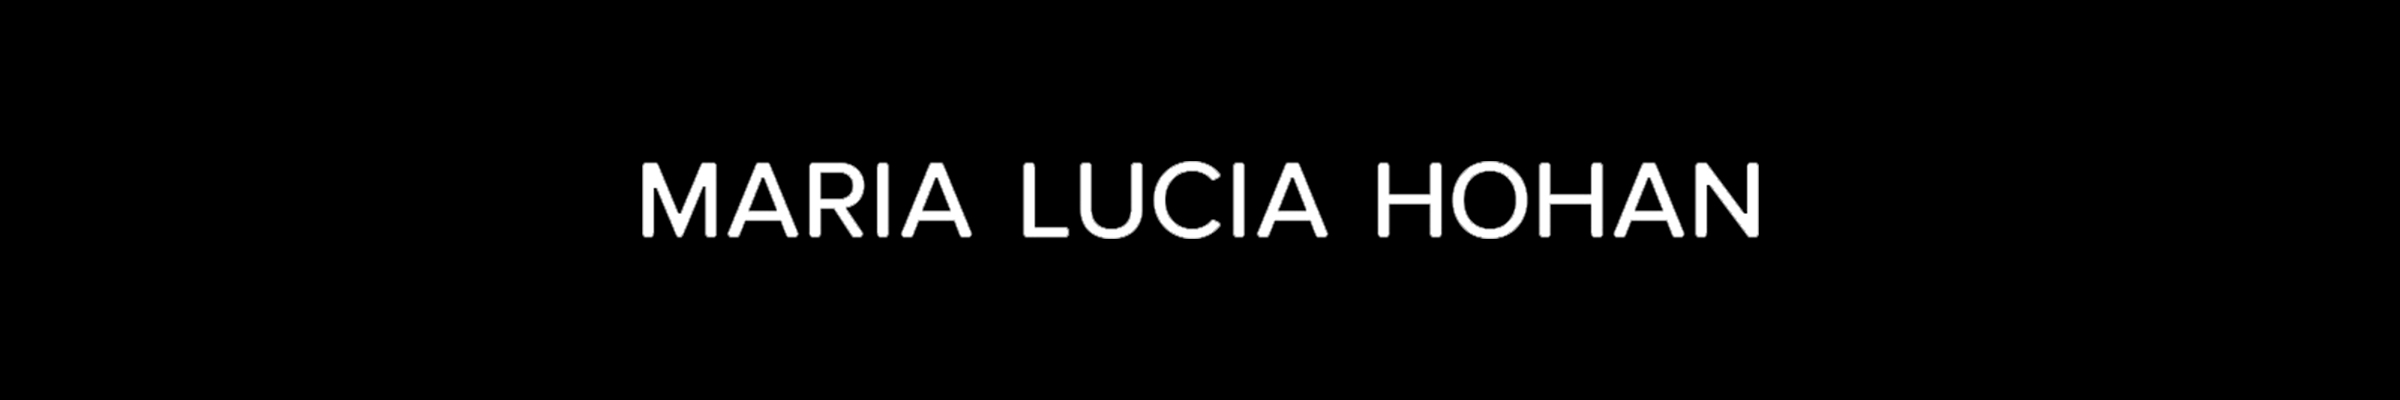 maria-lucia-hohan-banner